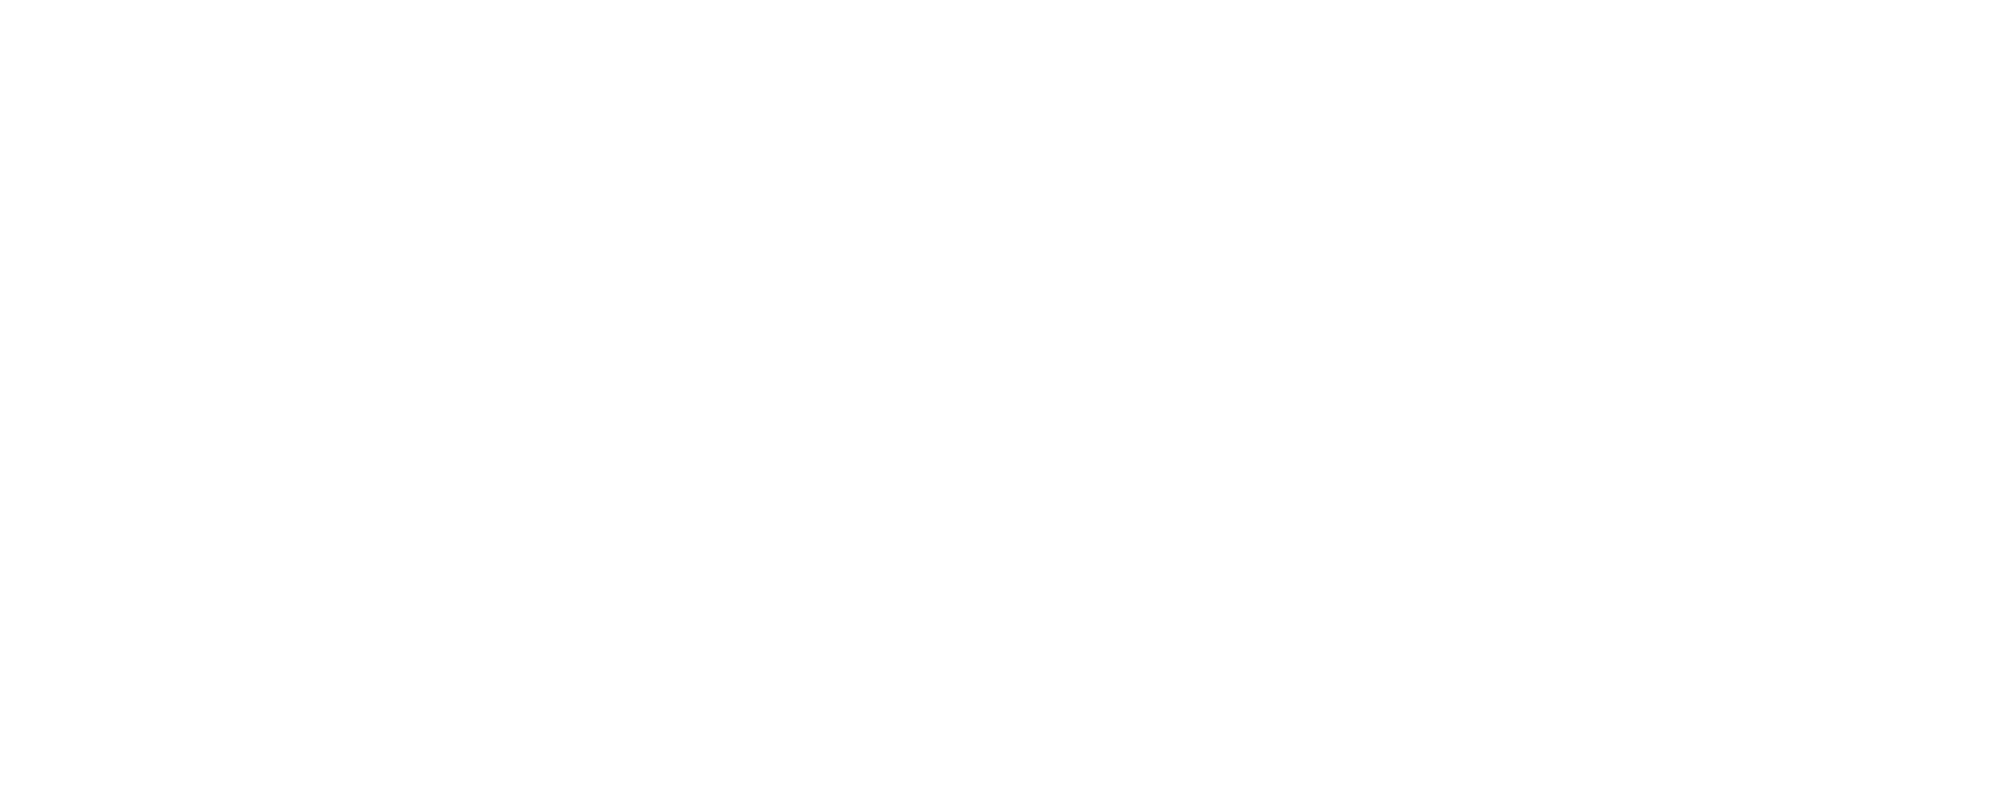 Logo David Vorderman Personal Trainer Voedingsdeskundige